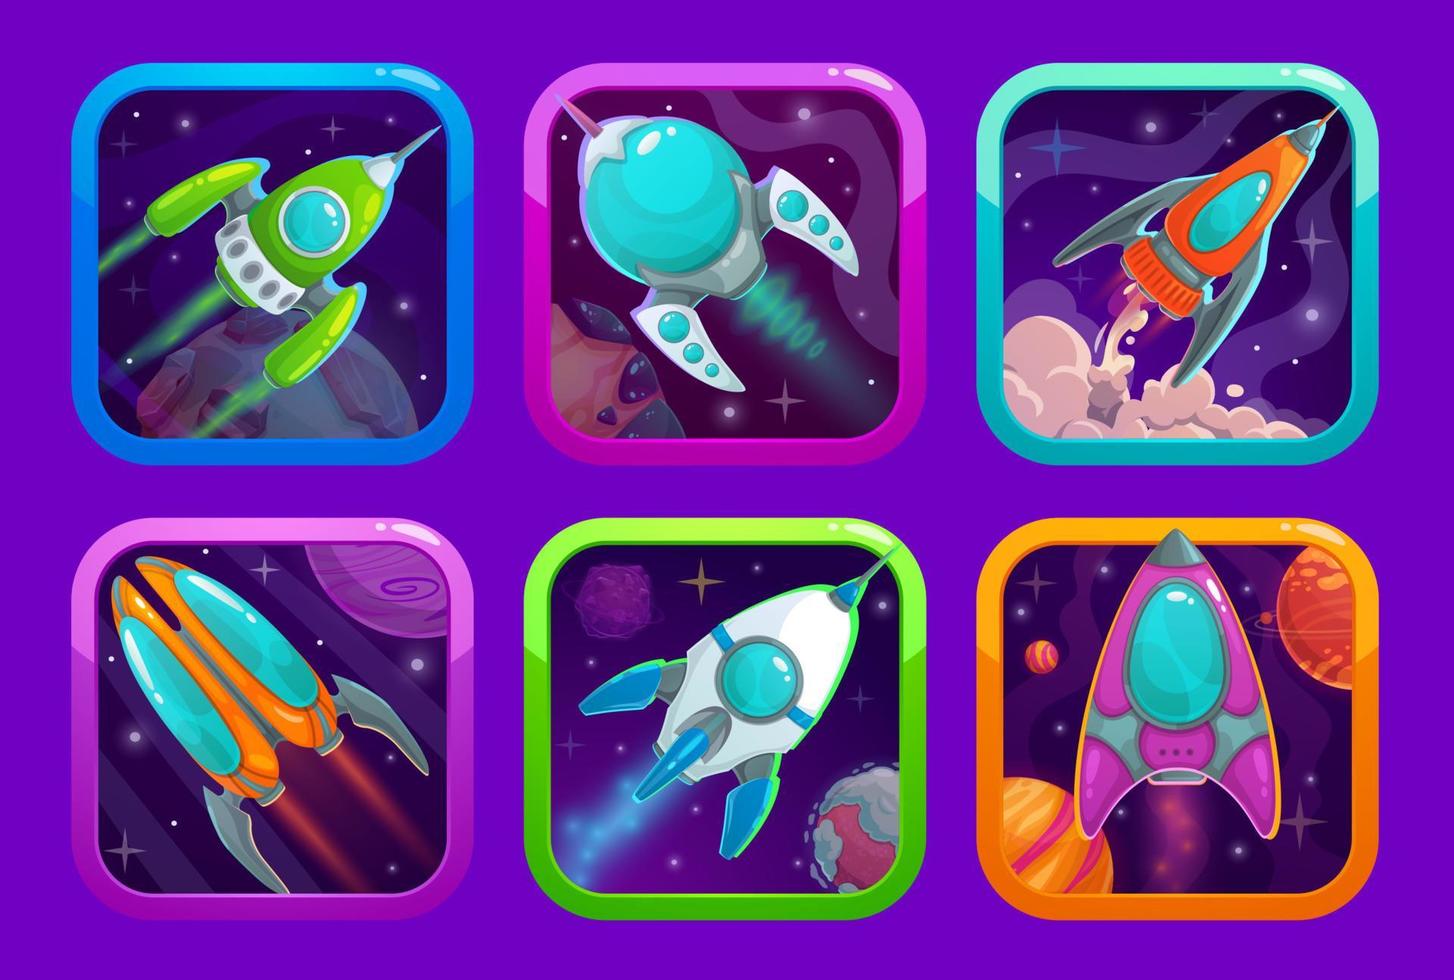 tekenfilm ruimte spel app pictogrammen, ruimteschip raketten vector